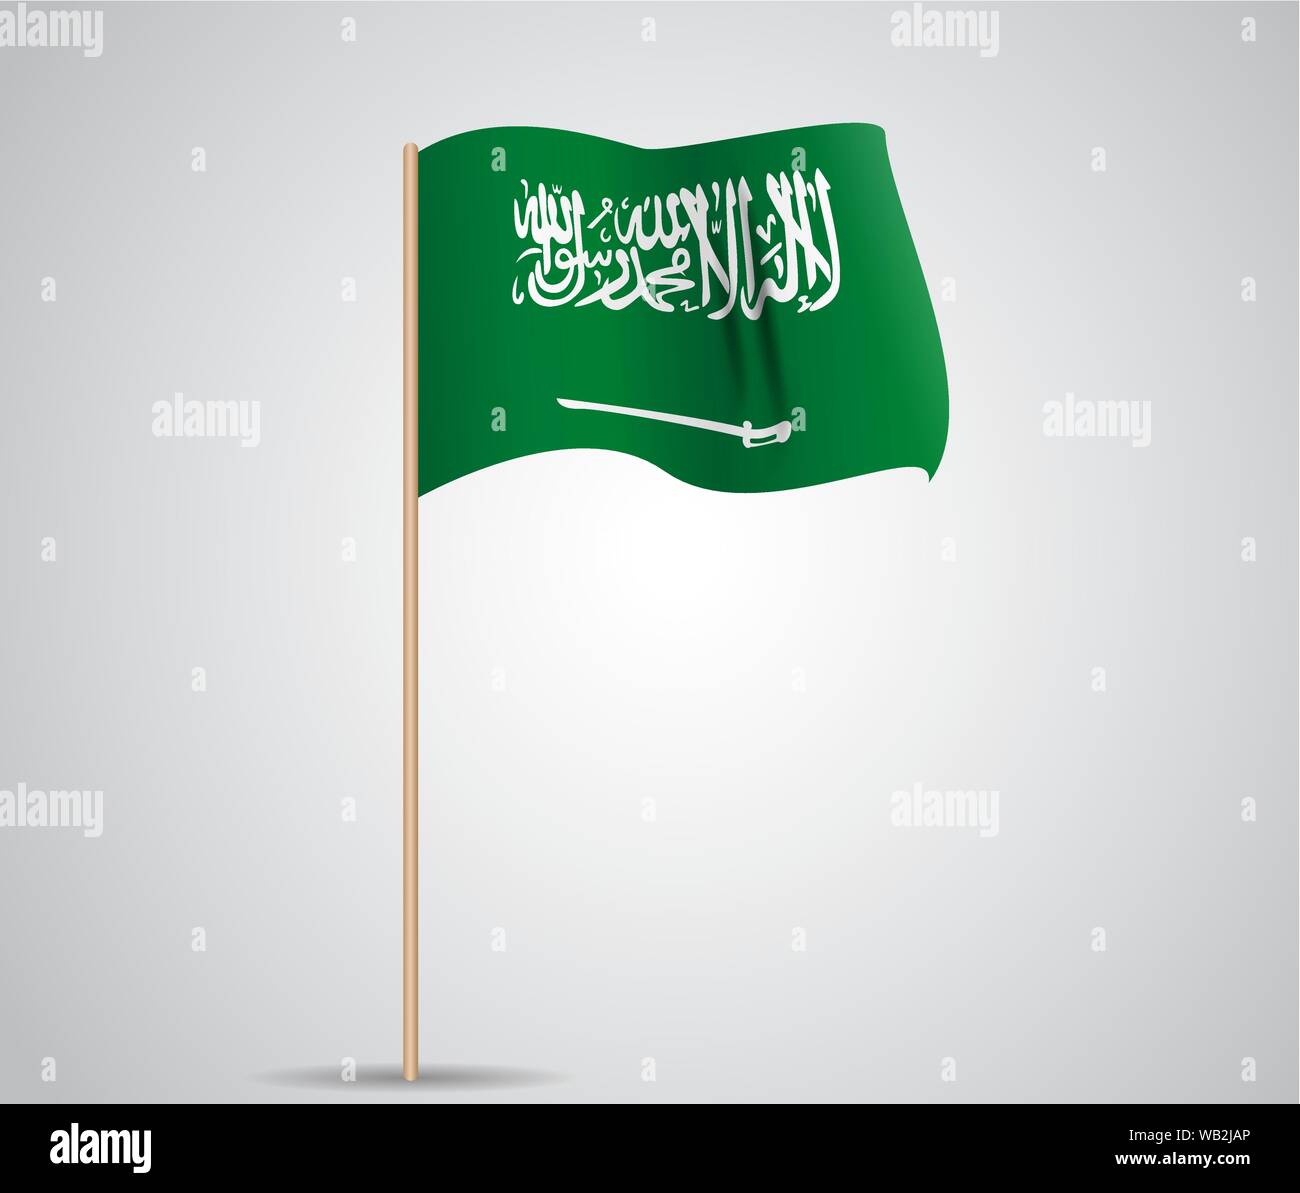 Зелено белый флаг с месяцем. Зеленый флаг. Бело зеленый флаг. Зеленый флаг с белыми буквами. Флаг зелёный белый зелёный.